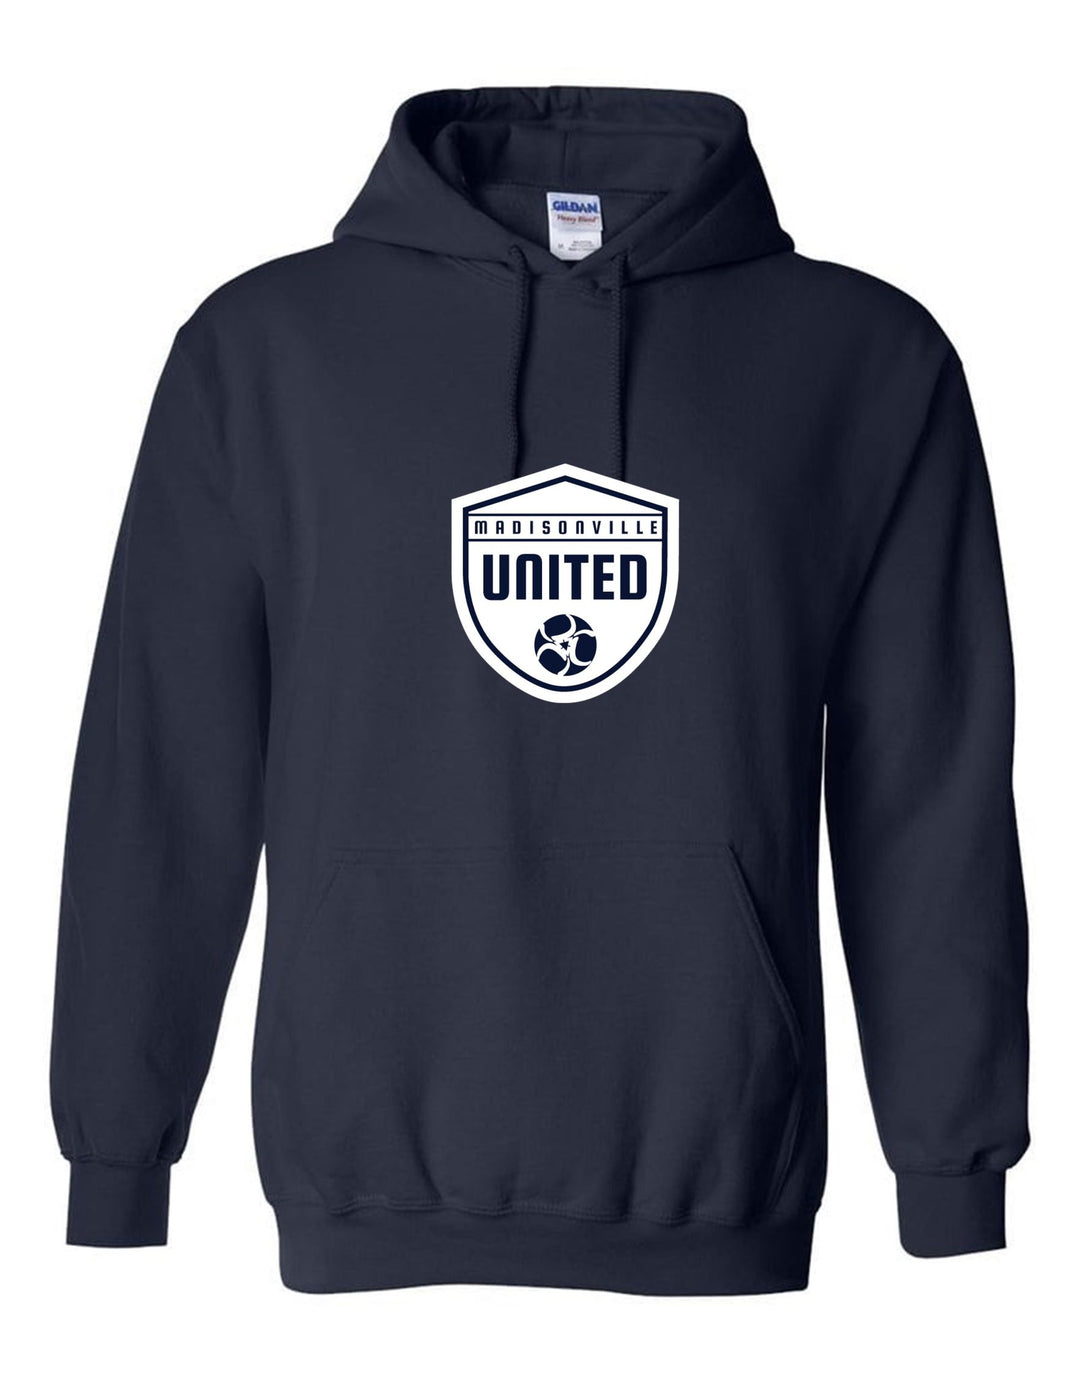 Madidsonville United Hoody - Black, Grey, Navy or White Madisonville United Spiritwear YOUTH SMALL NAVY - Third Coast Soccer